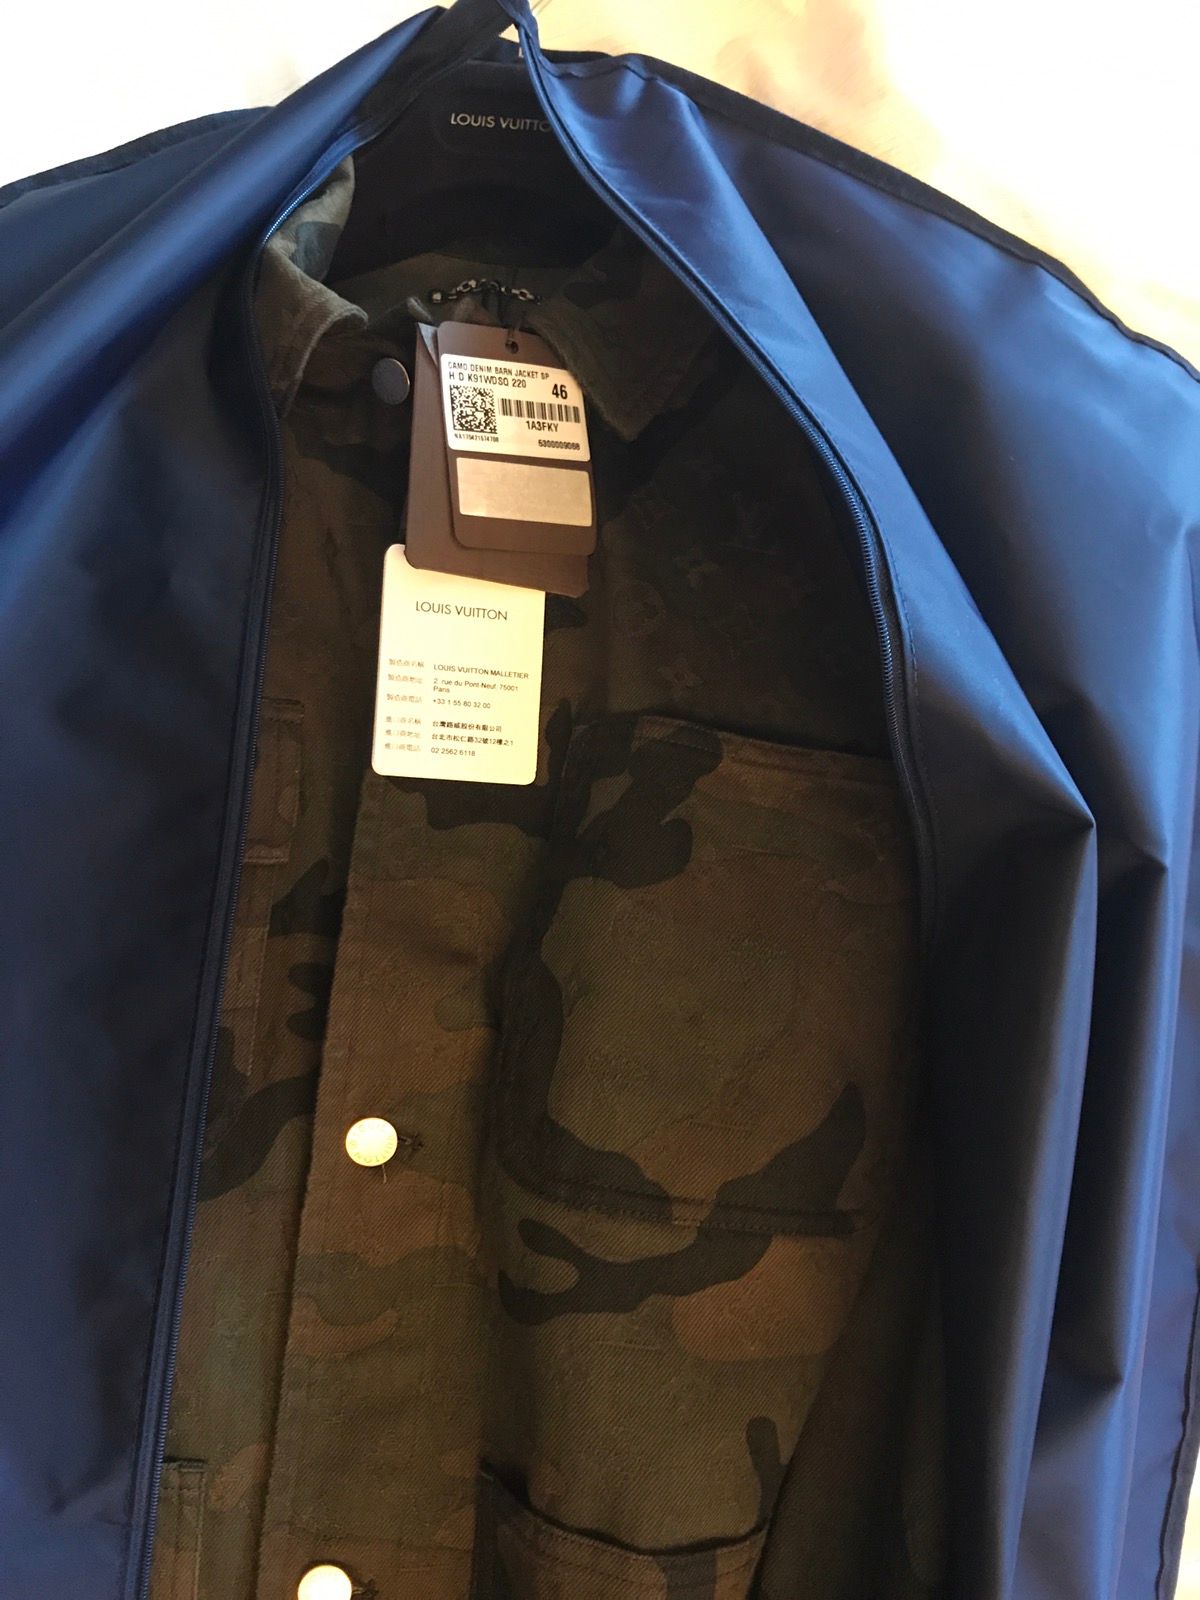 LOUIS VUITTON 1A3FE7 Camouflage Tracker Jacket JACQUARD DENIM CHORE COAT  Supreme Collaboration Cover All Cotton Men